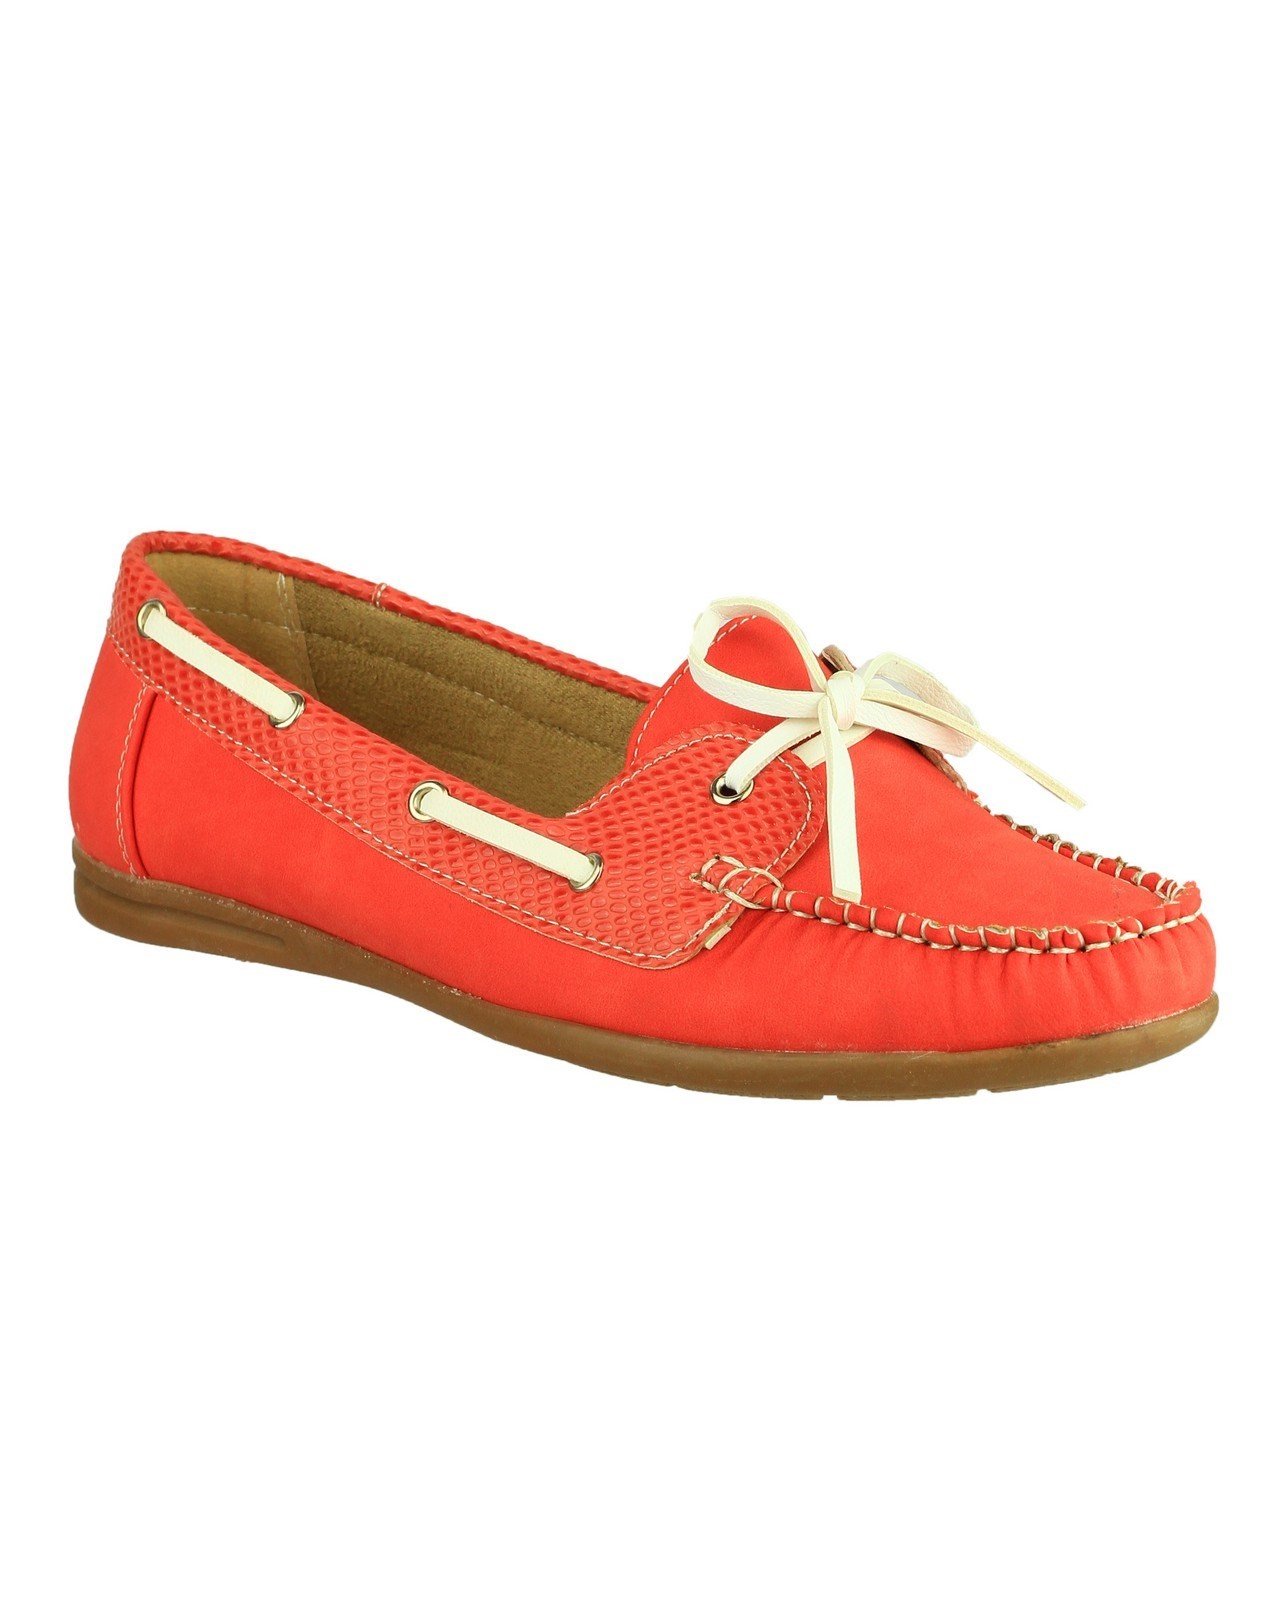 Divaz Women's Belgravia Slip on Shoe Red 19838-31017 - Red 5